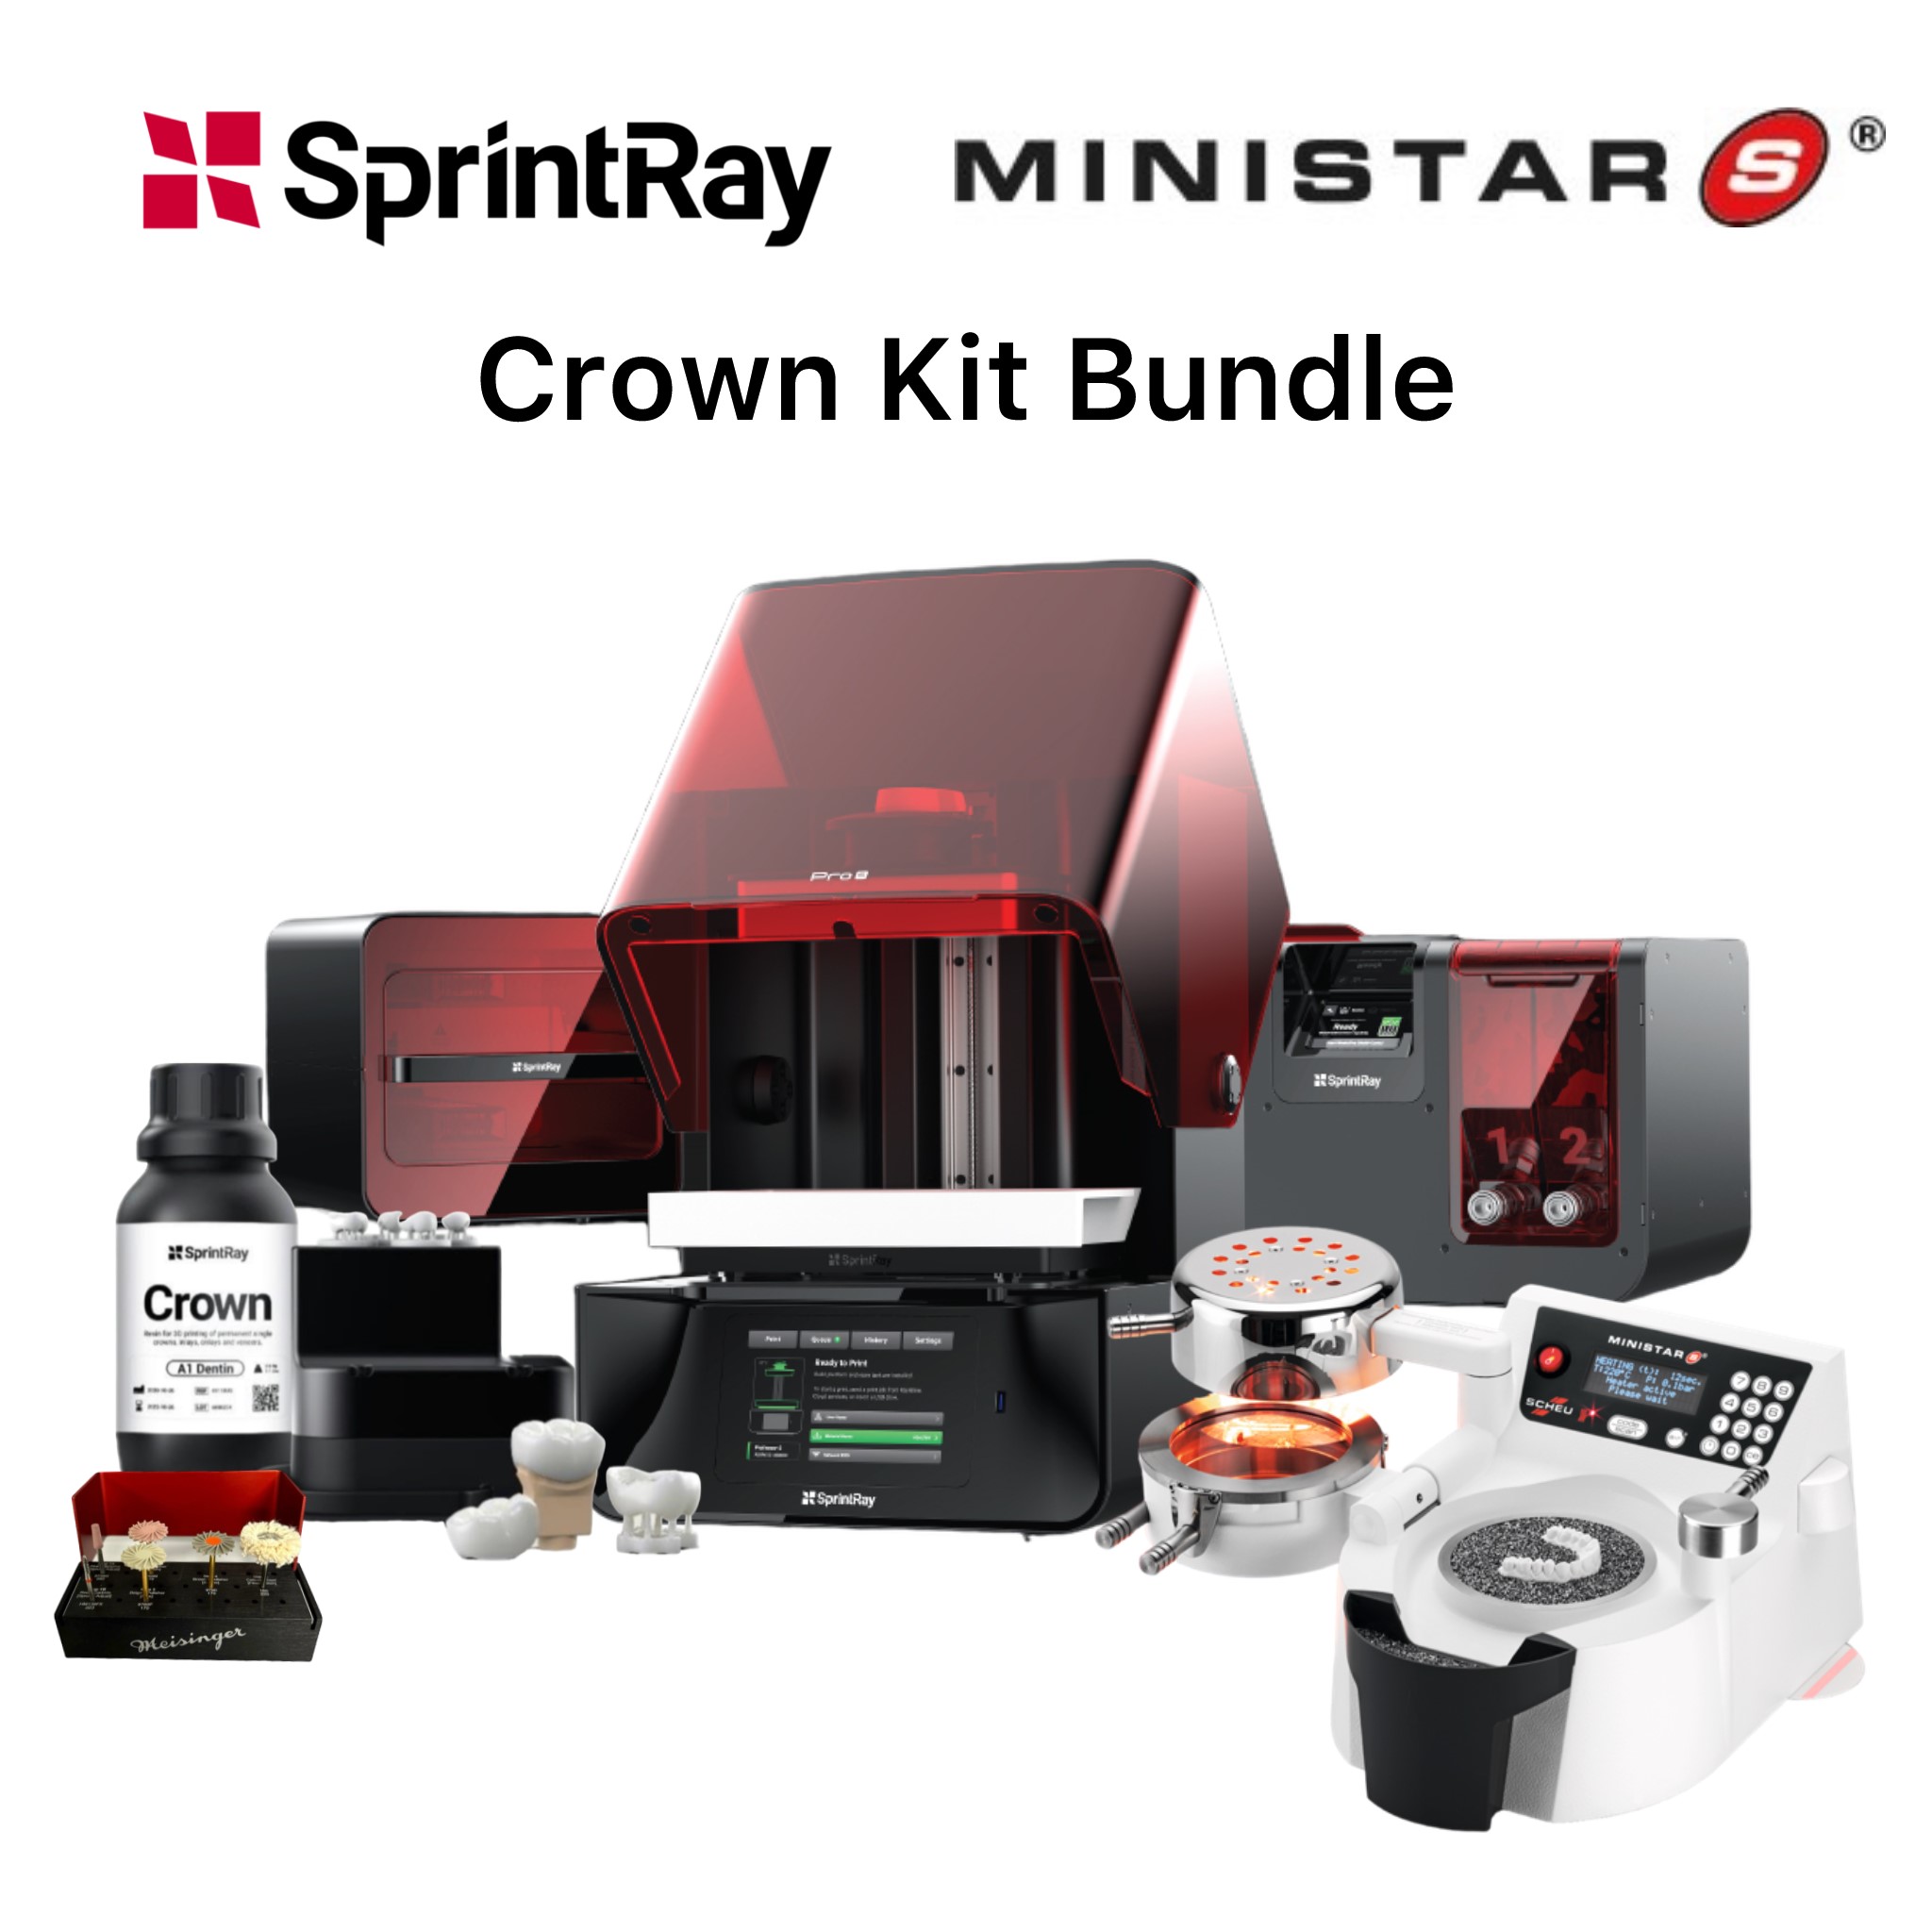 SprintRay Pro95 S 3D Printer Crown Kit Bundle & Ministar S®